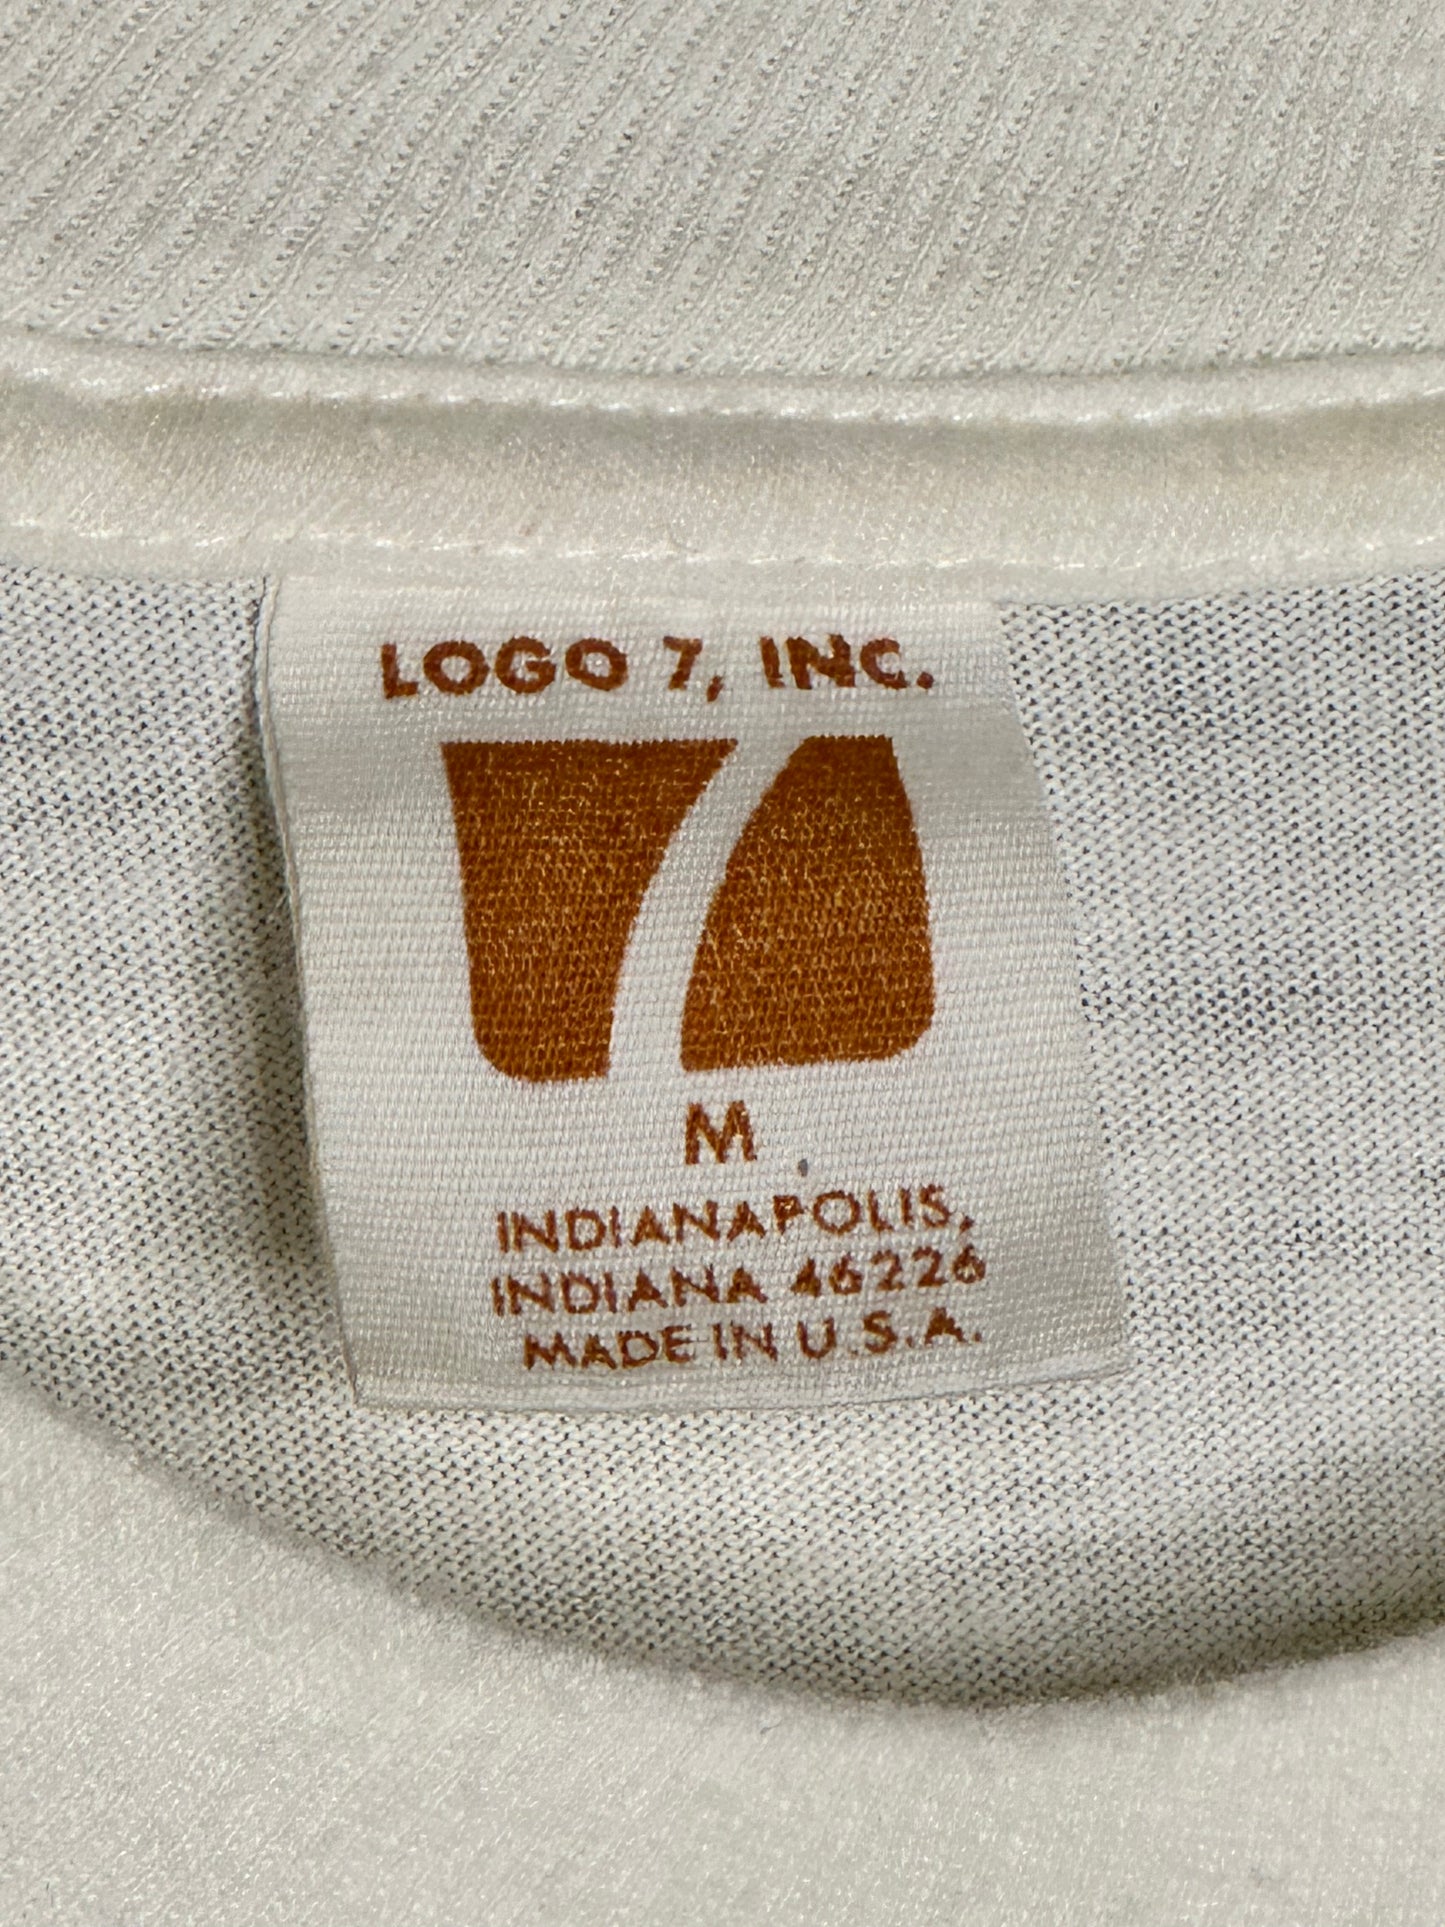 Vintage 1984 USFL Championship Game T-Shirt M